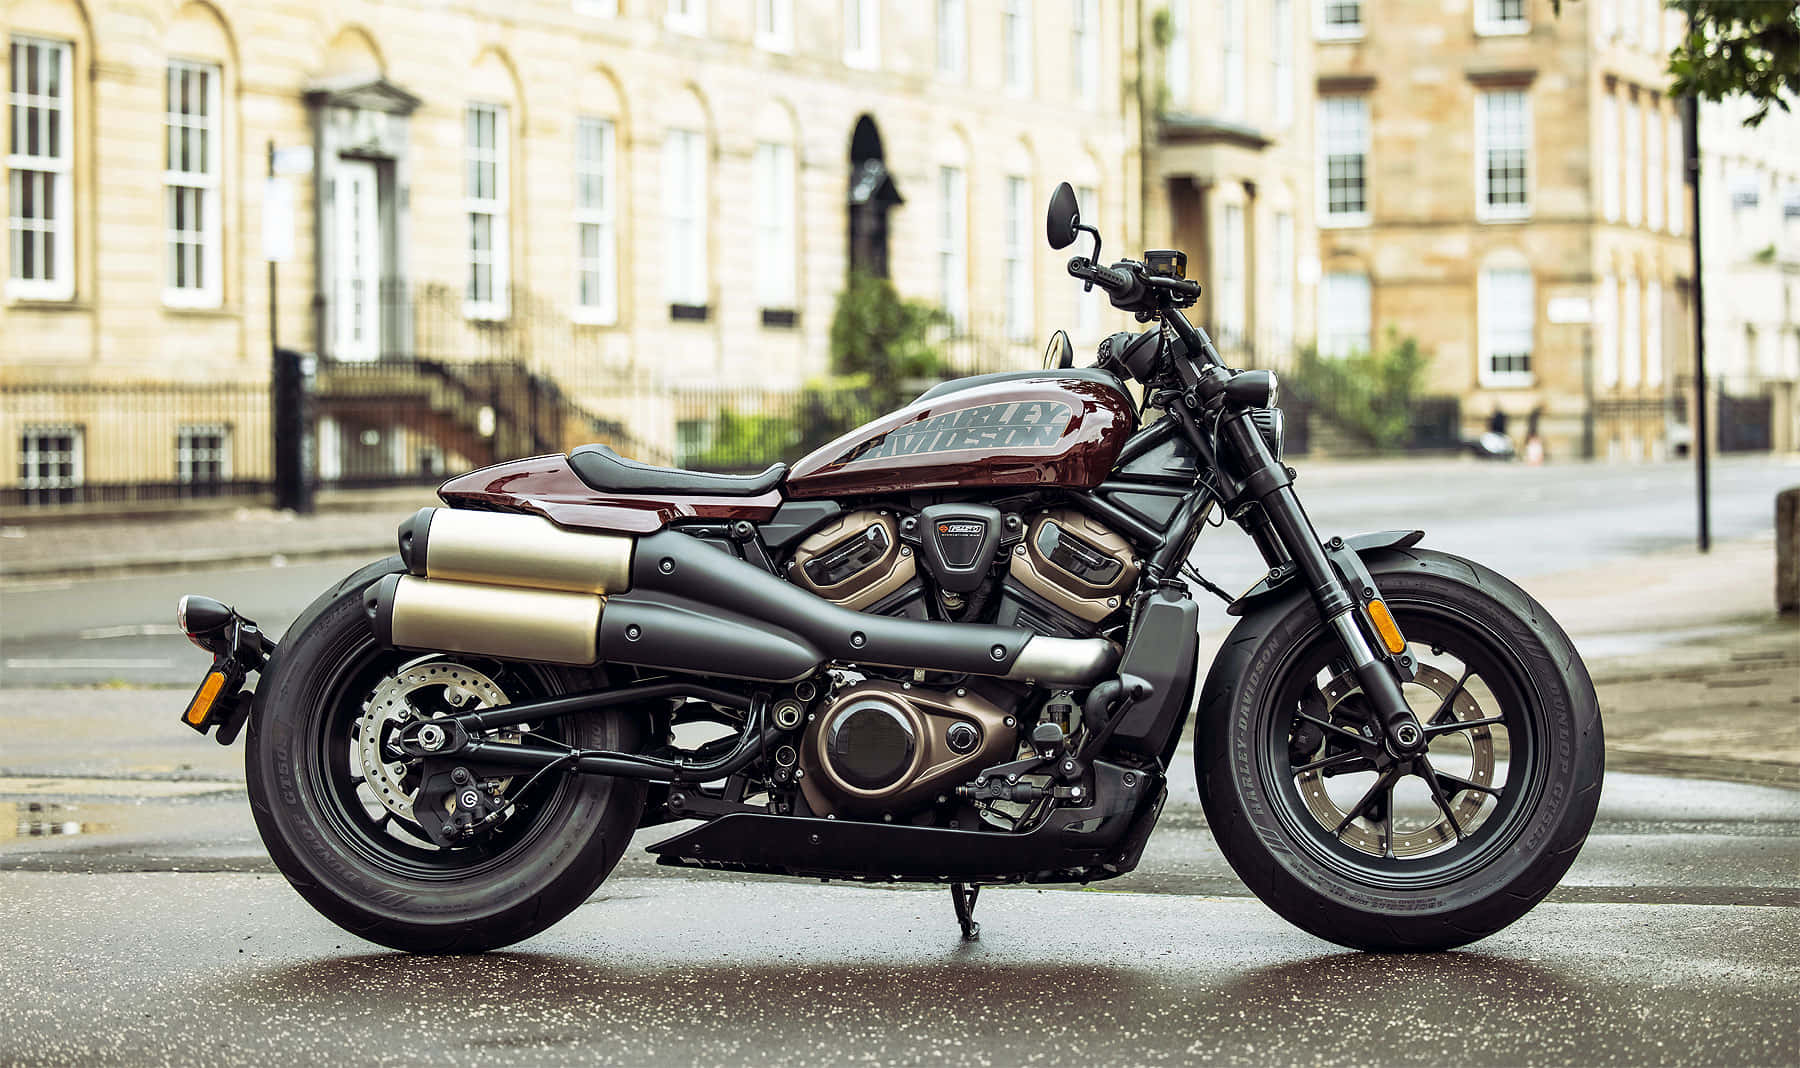 Un'iconaamericana: Harley Davidson